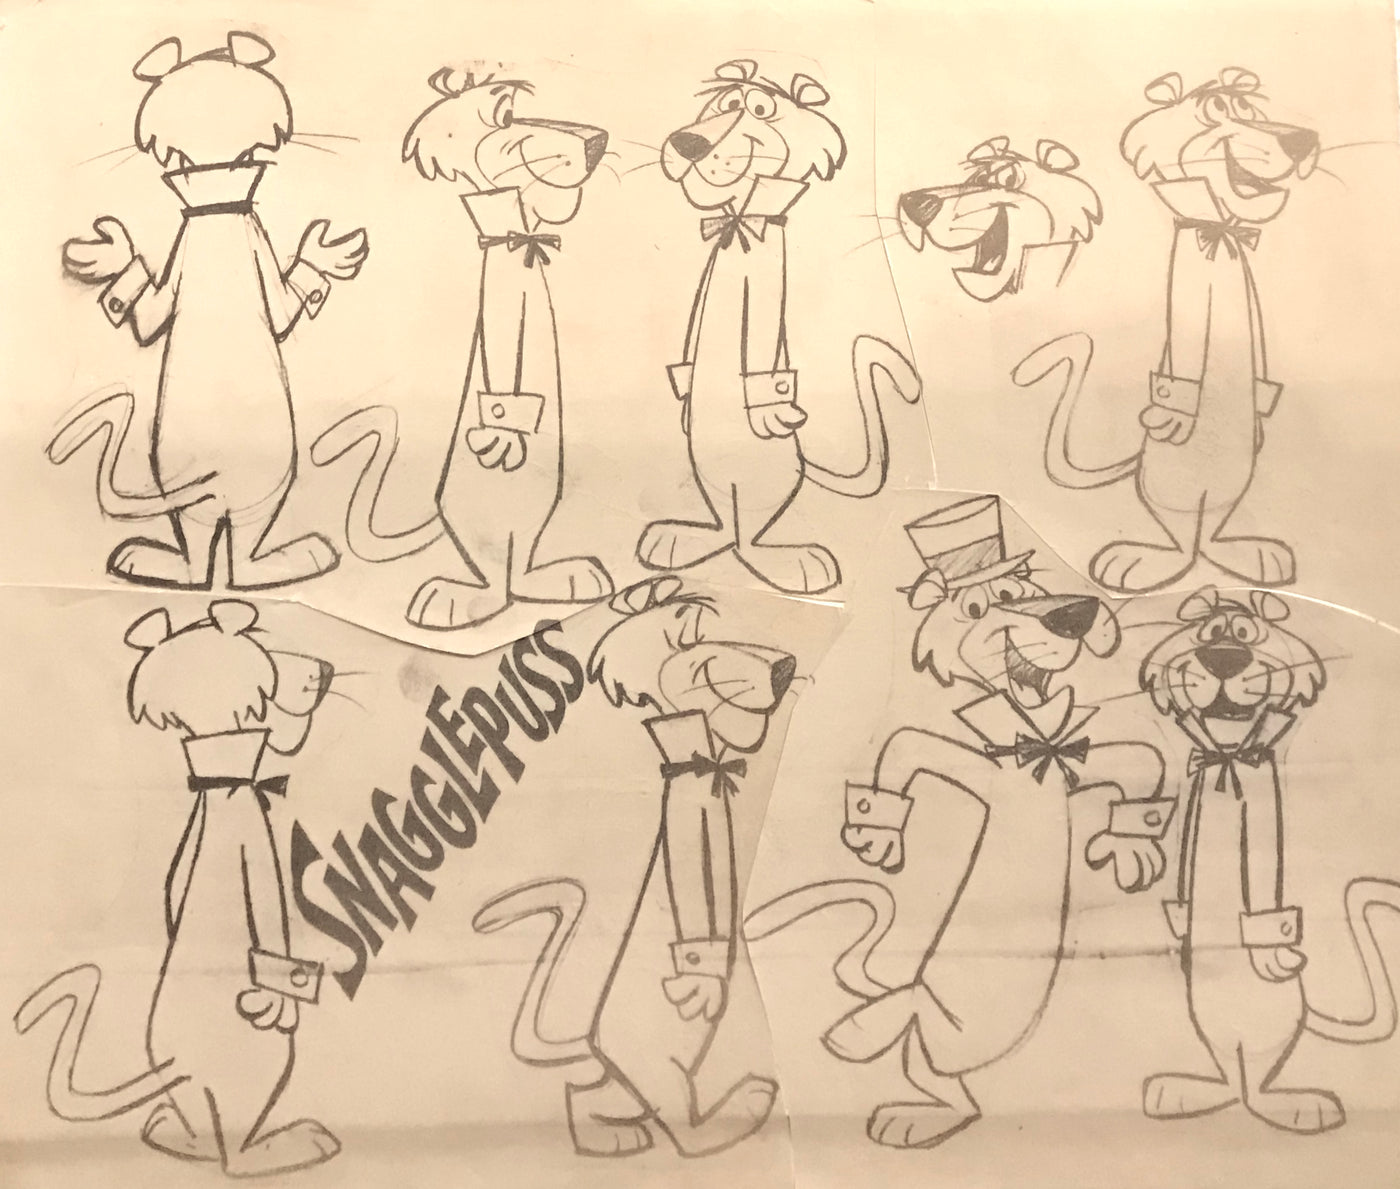 Hanna Barbera Model Sheet of Snagglepuss